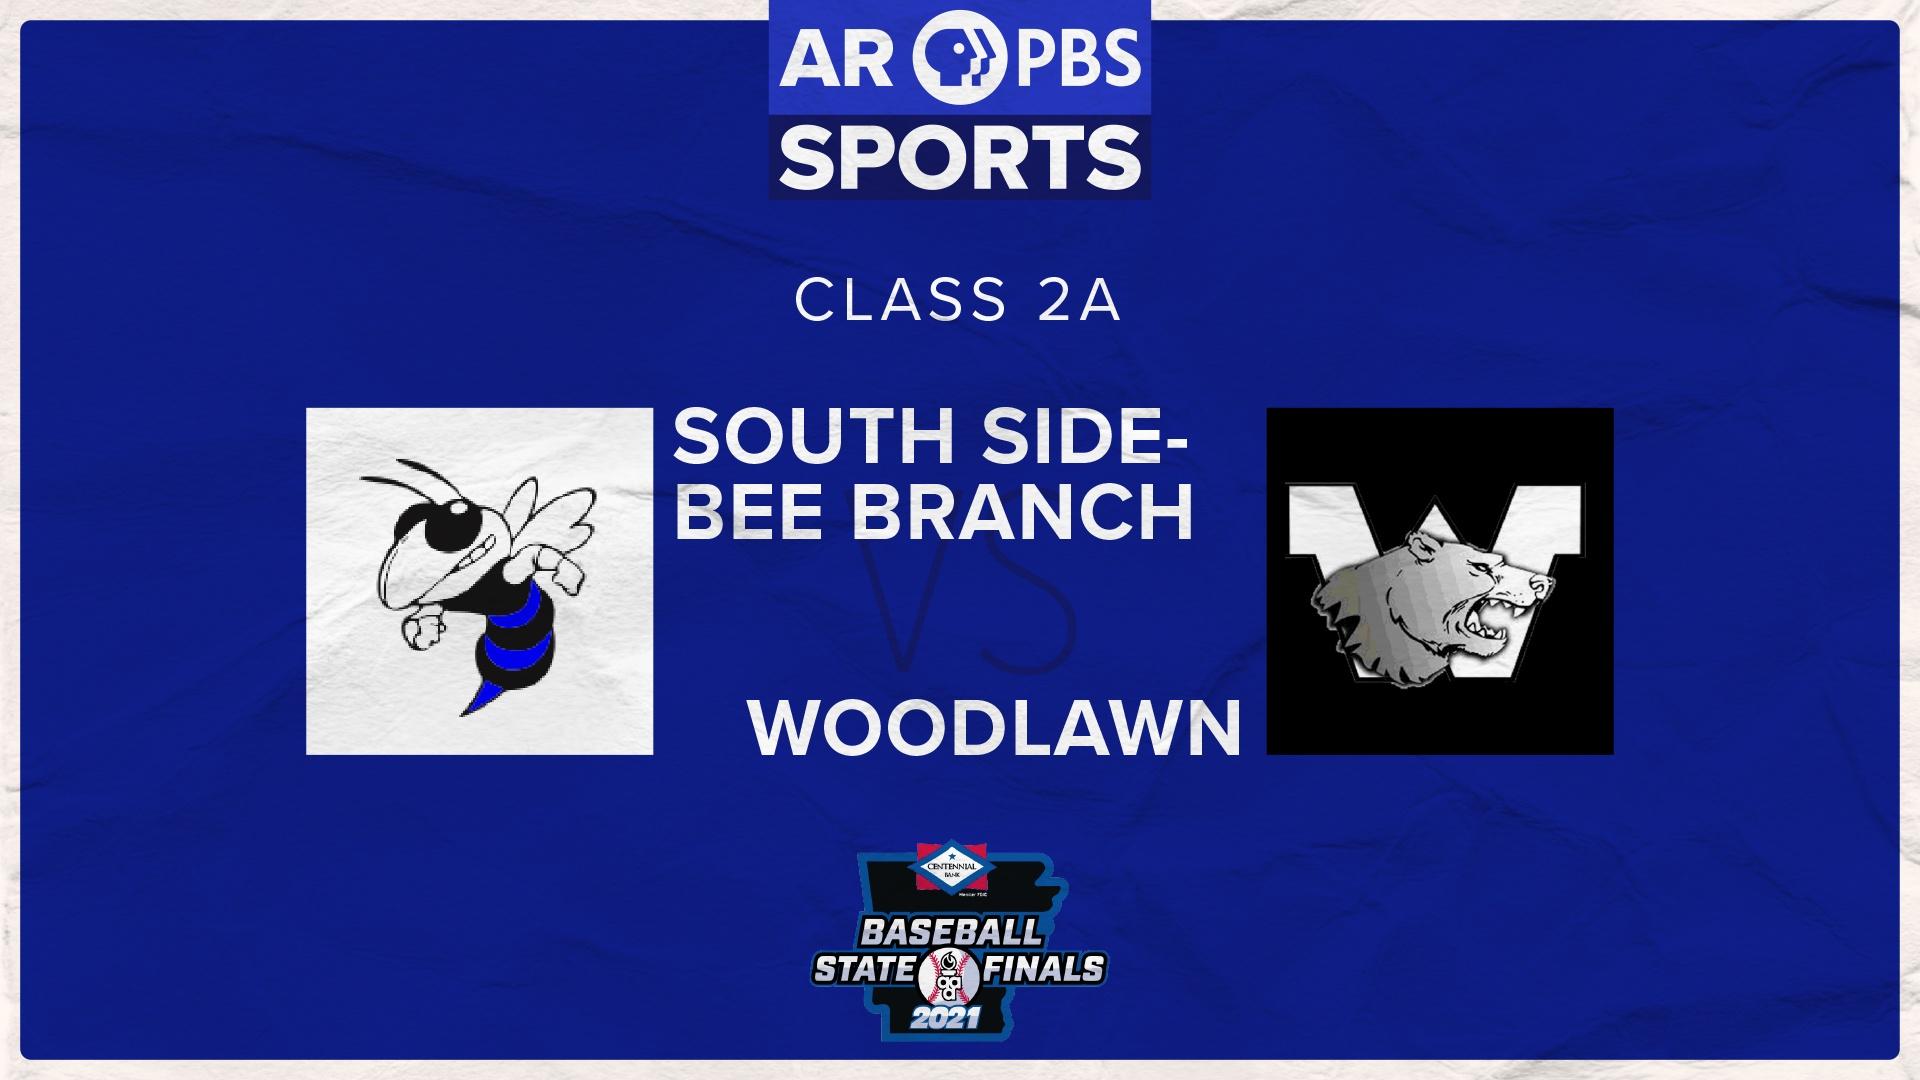 Arkansas PBS Sports, 2021 Baseball State Finals - 2A